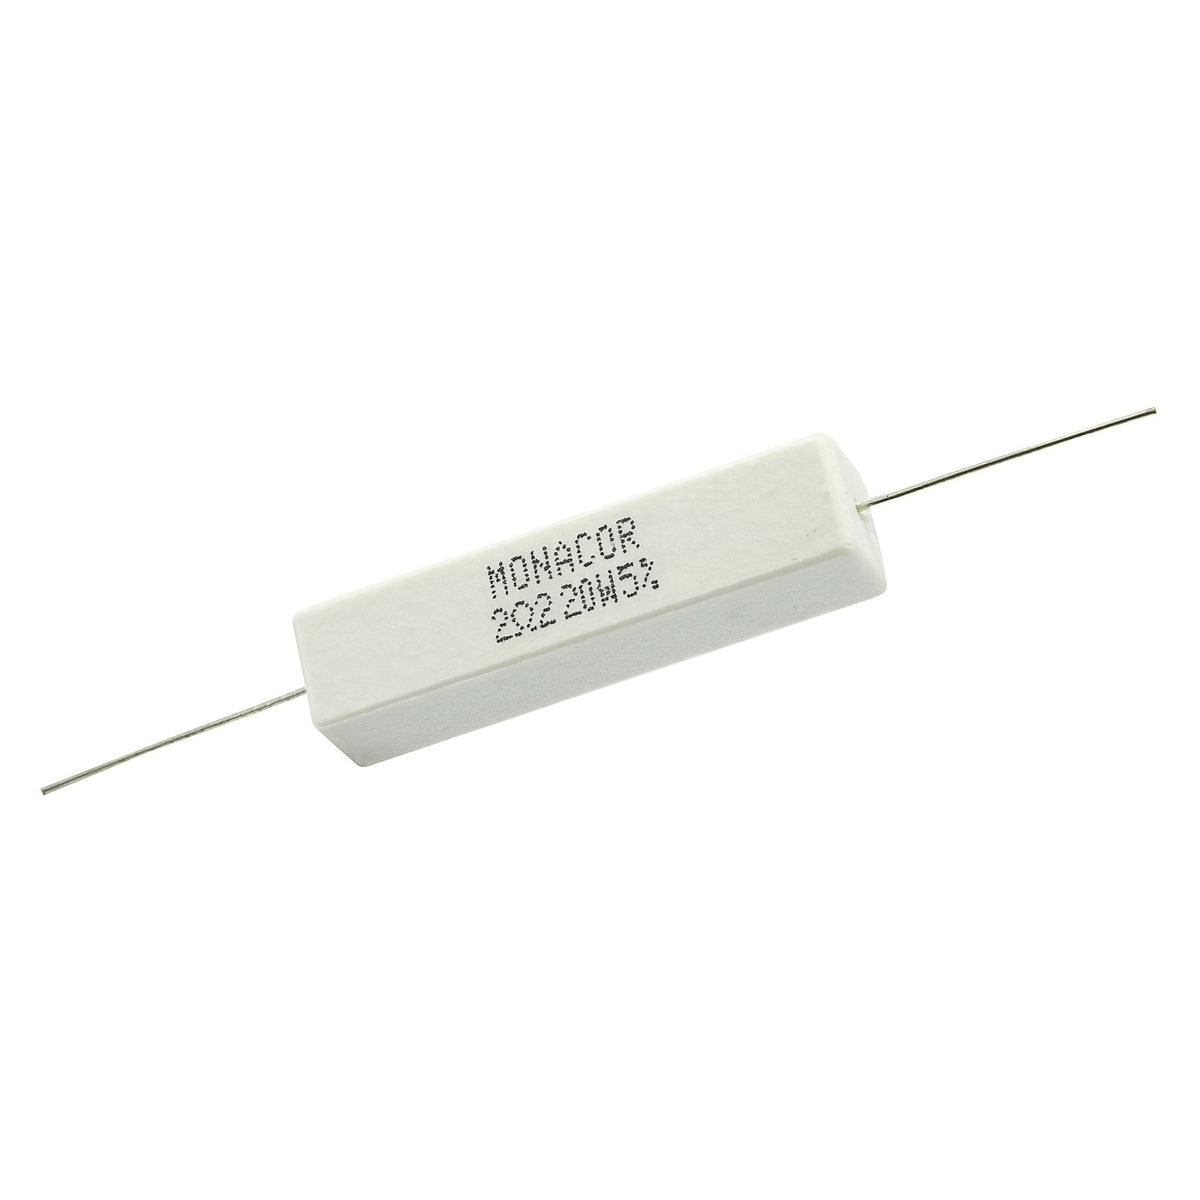 2.2 Ohm 20 Watt 5% Ceramic Wirewound Resistor - Willys-Hifi Ltd